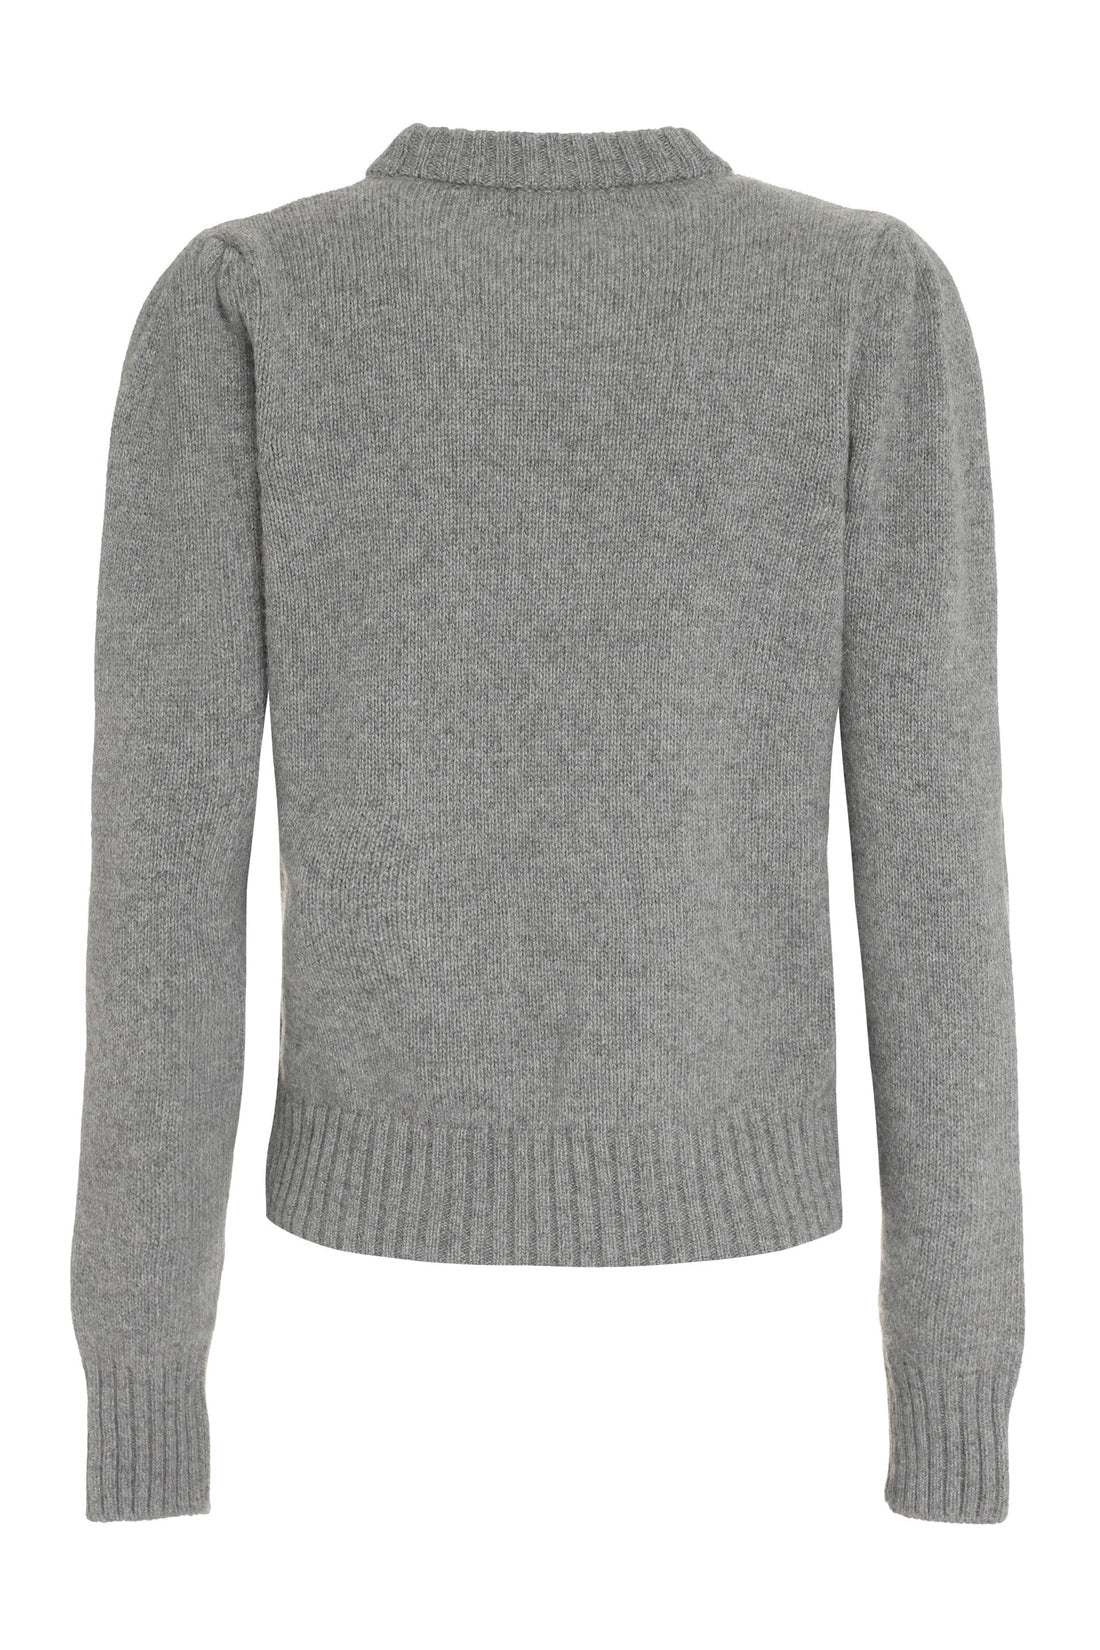 GANNI-OUTLET-SALE-Logo wool sweater-ARCHIVIST